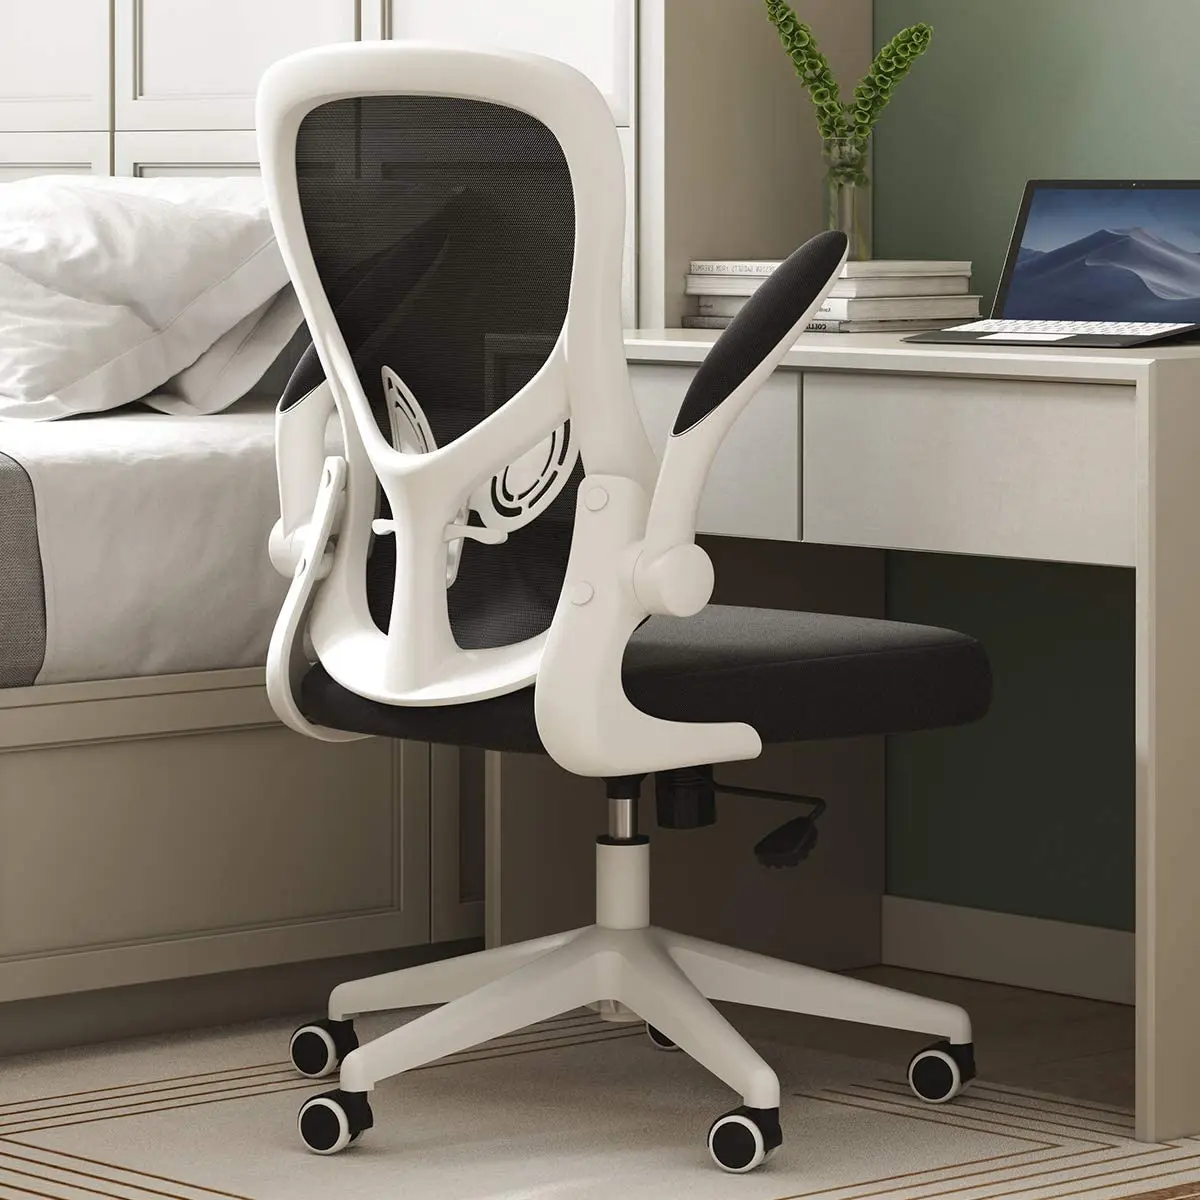 HBADA Office Chair Black Mesh Desk Chair Adjustable Height Rolling Stool Drafting Chair 